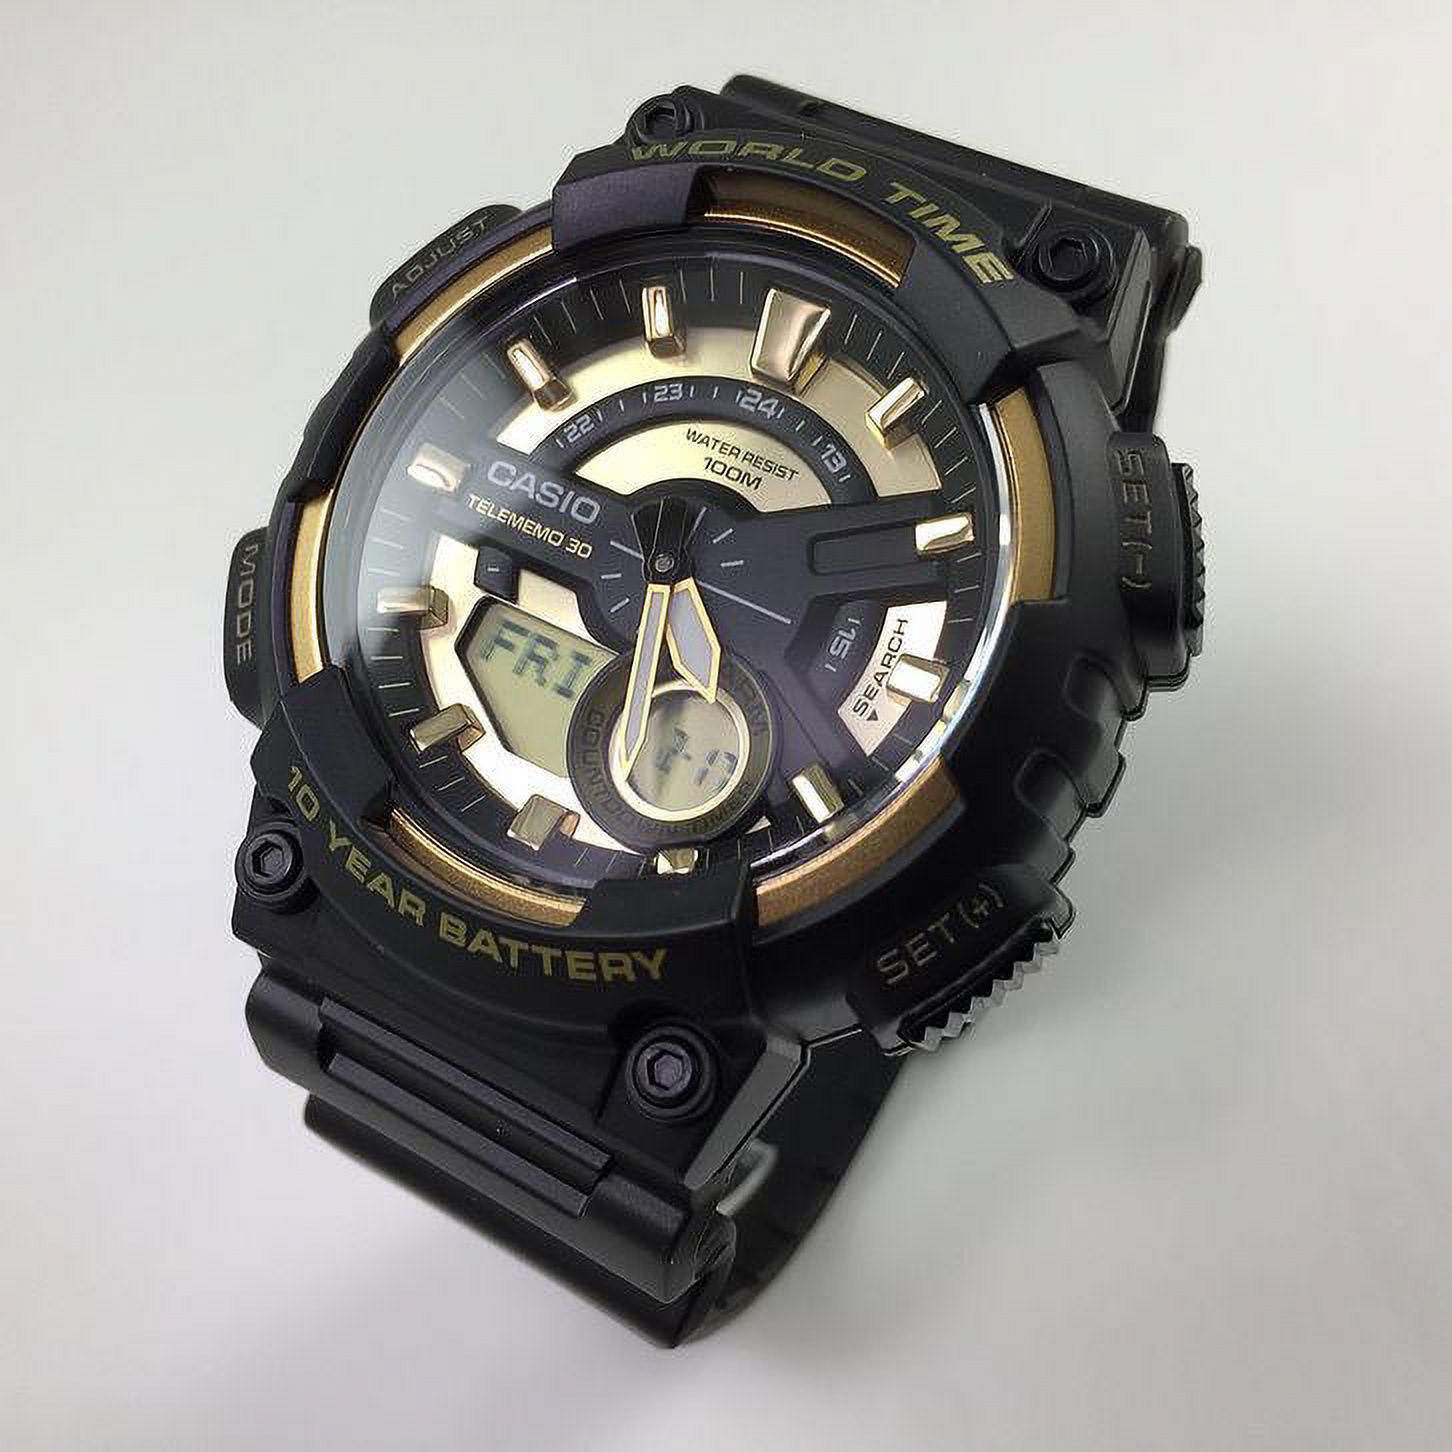 Men's Ana-Digi Watch, Black/Gold, AEQ110BW-9AVCF - image 2 of 4